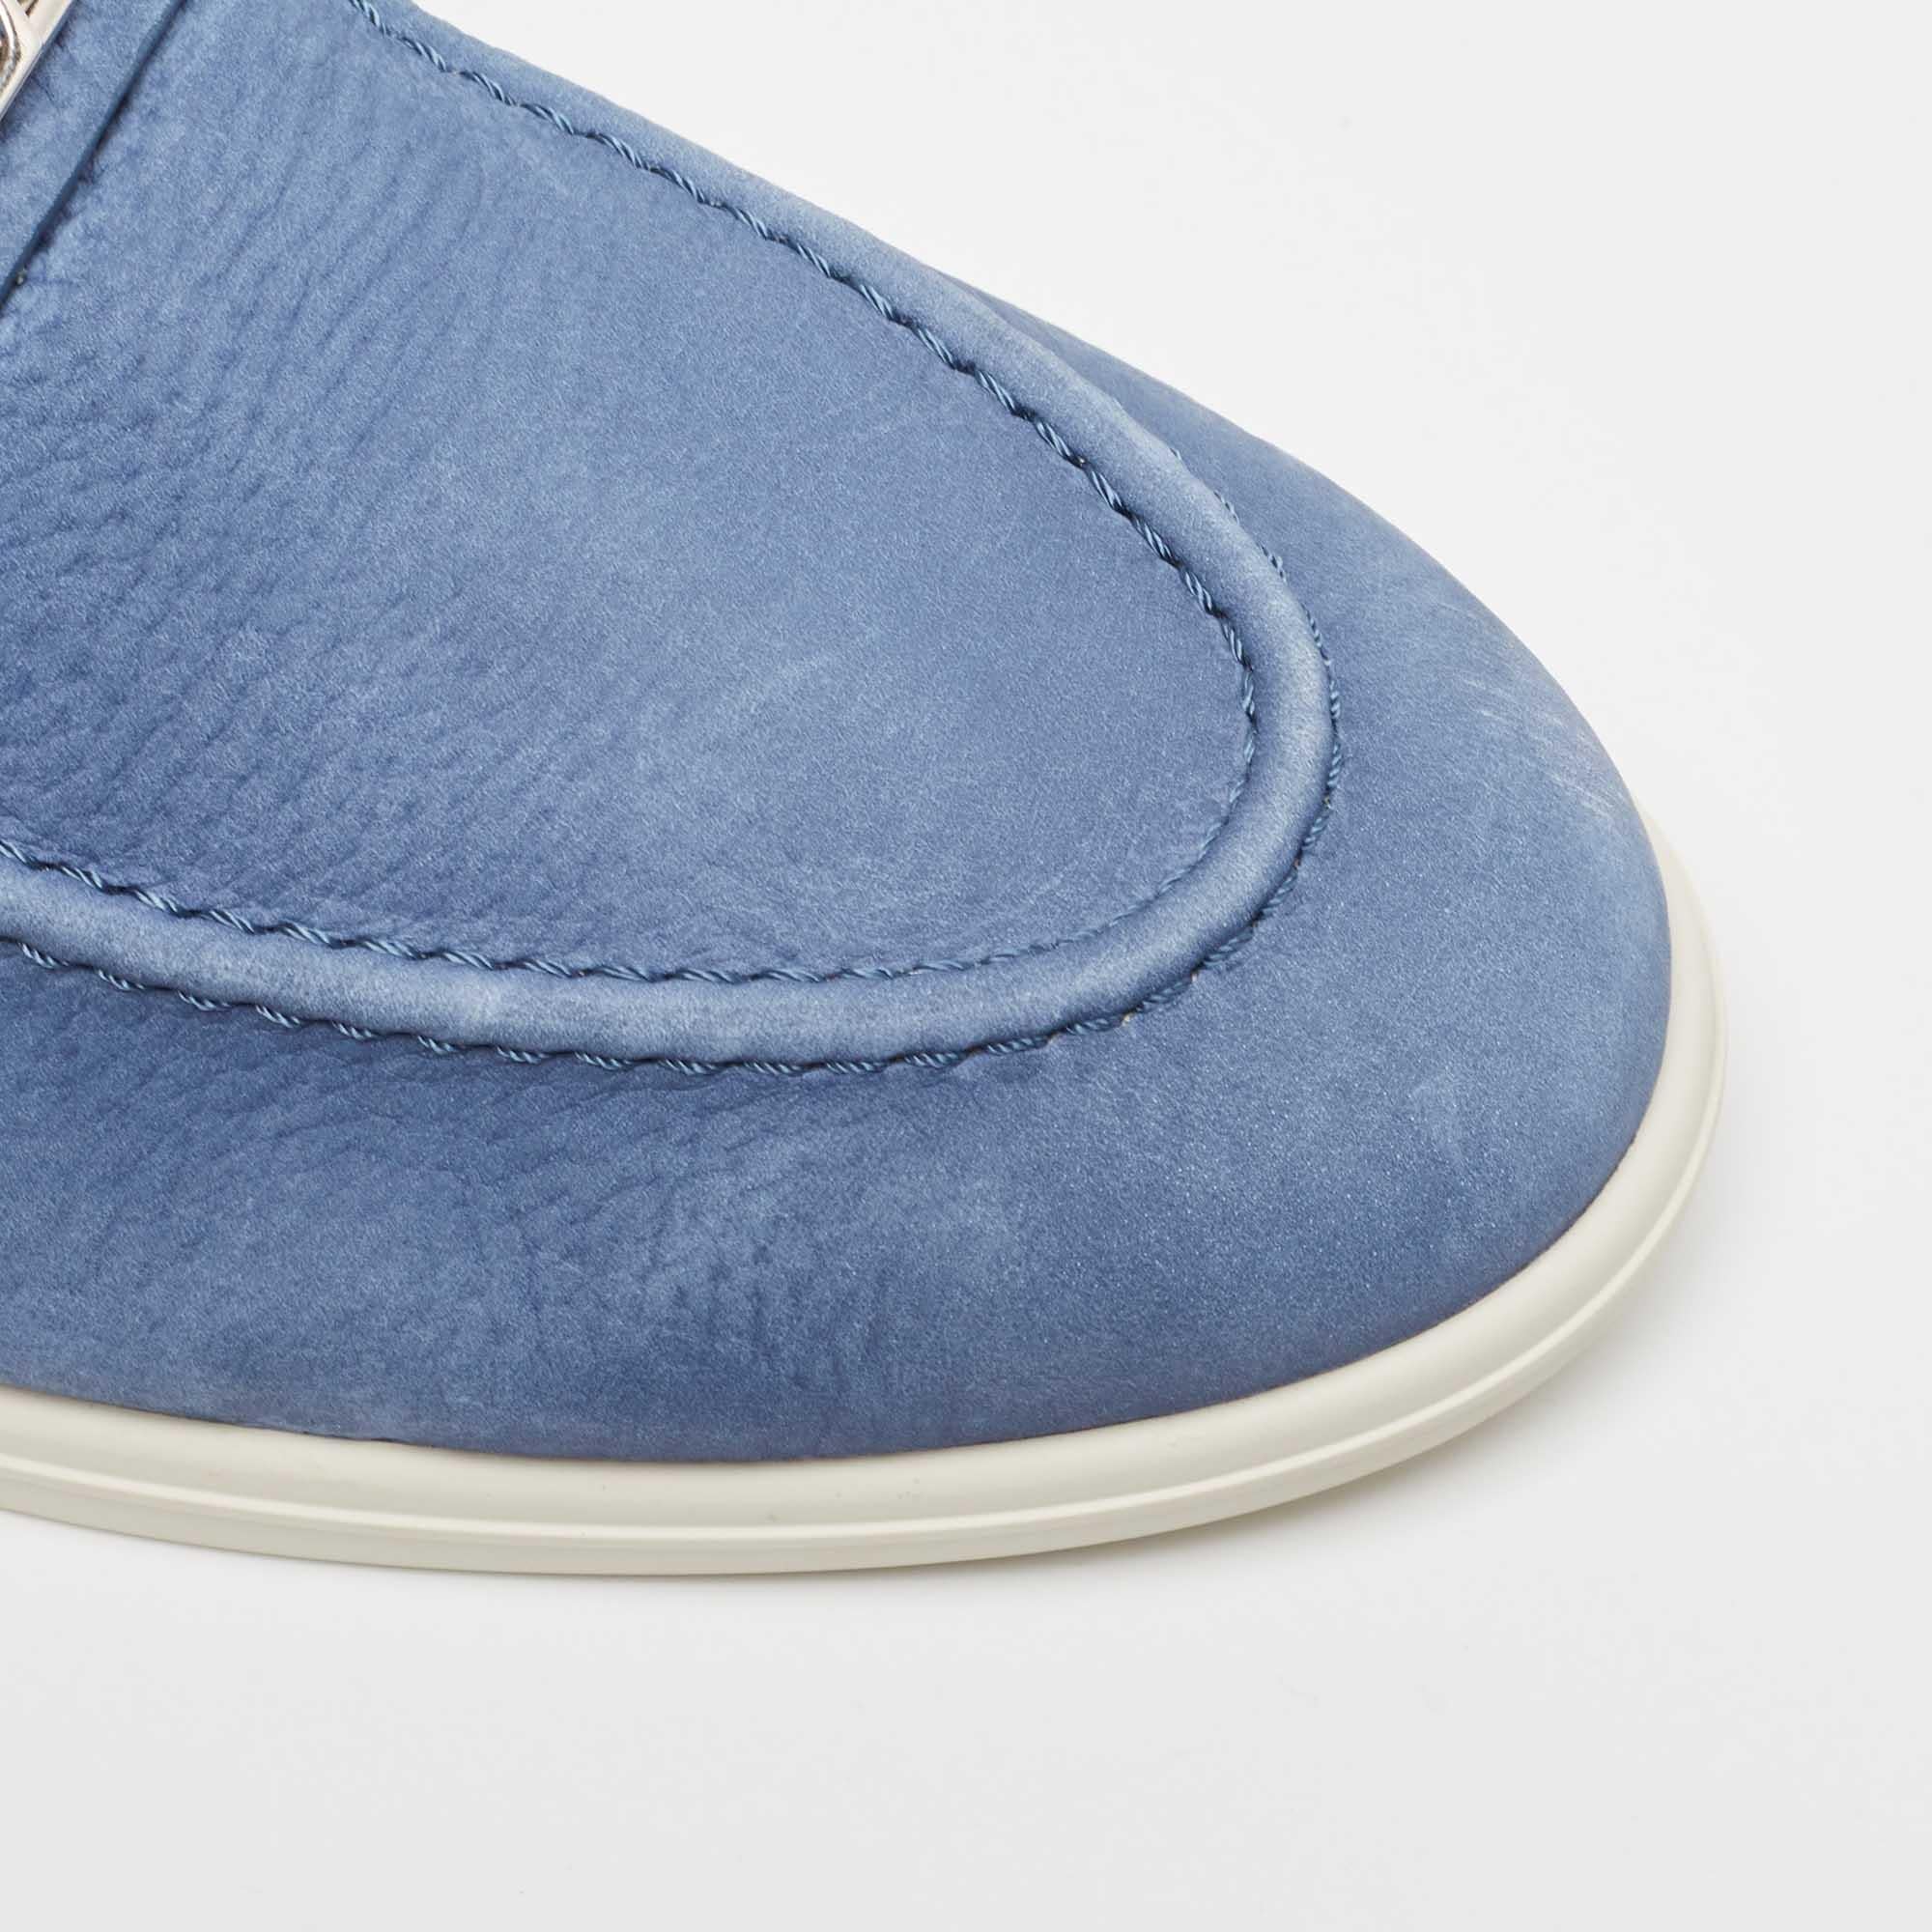 Women's Louis Vuitton Blue Nubuck Leather Estate Loafers Size 42